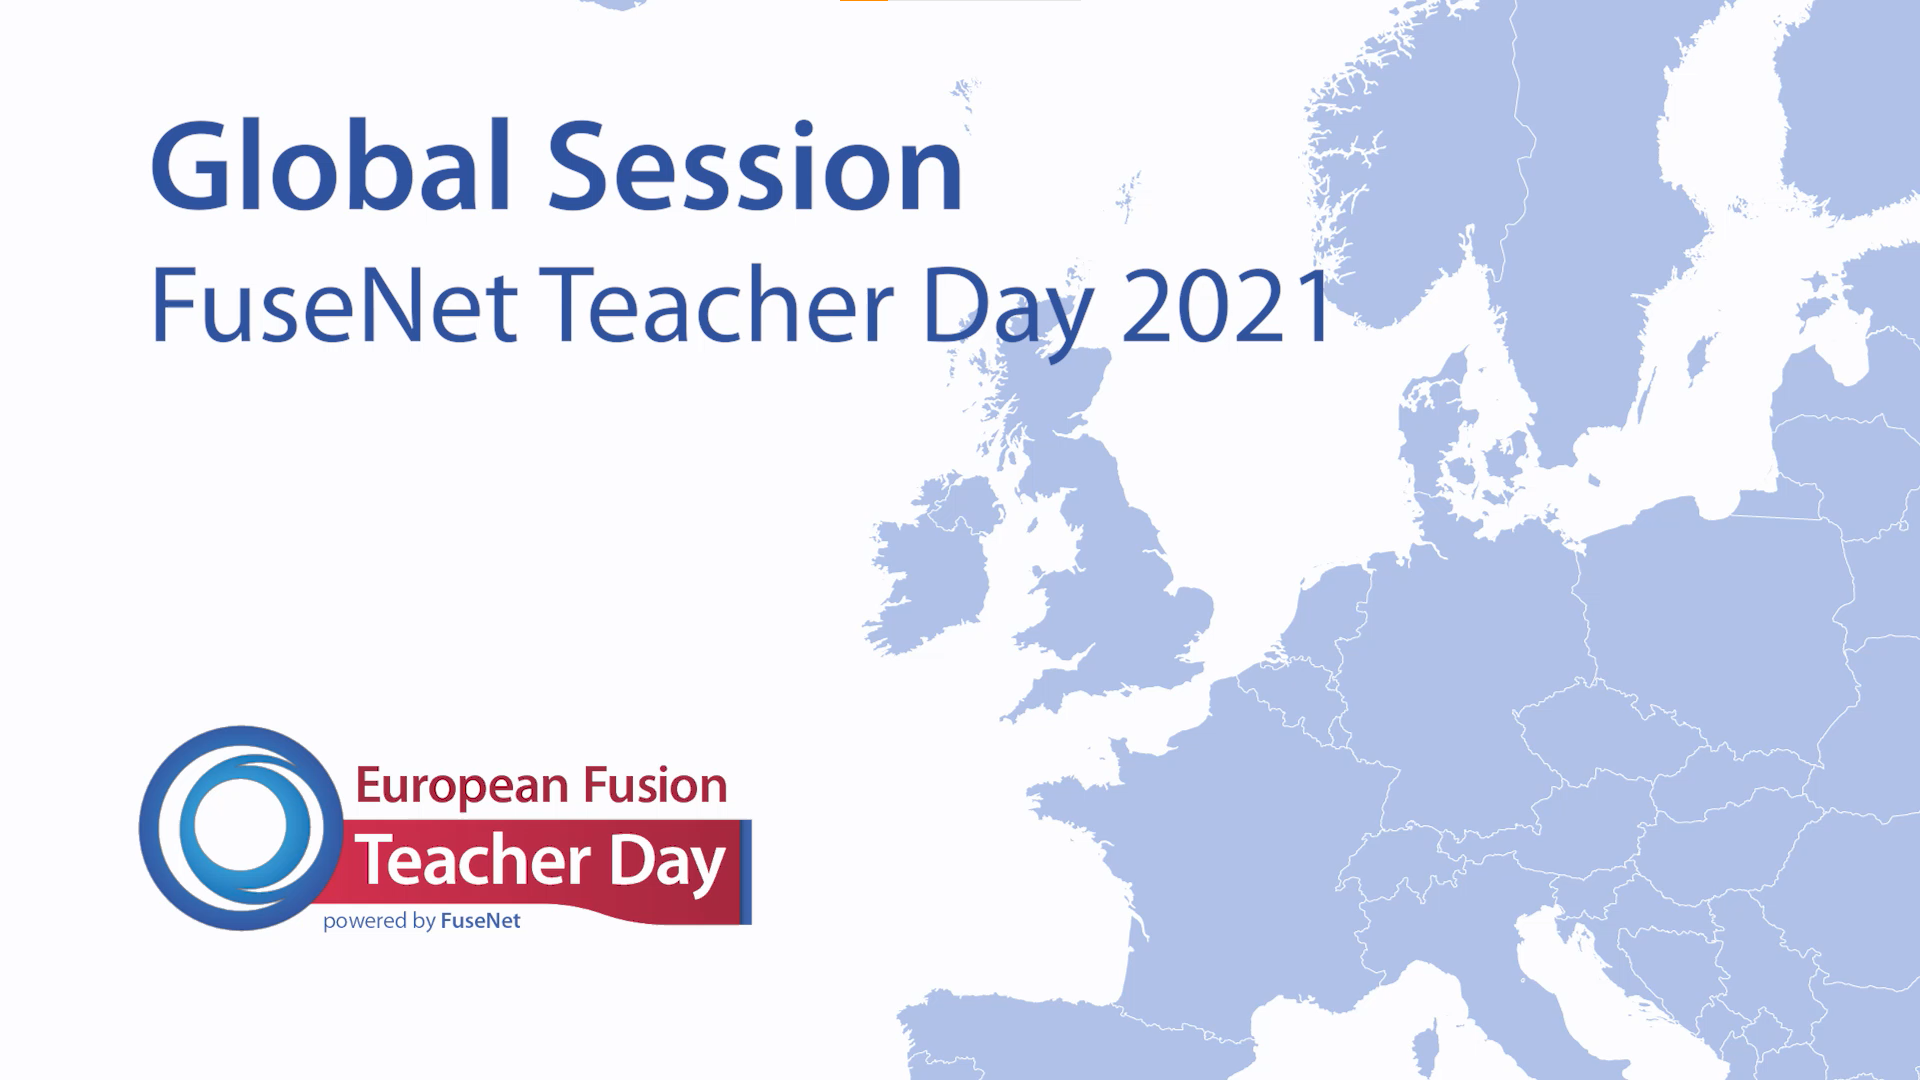 European Fusion Teacher Day 2021